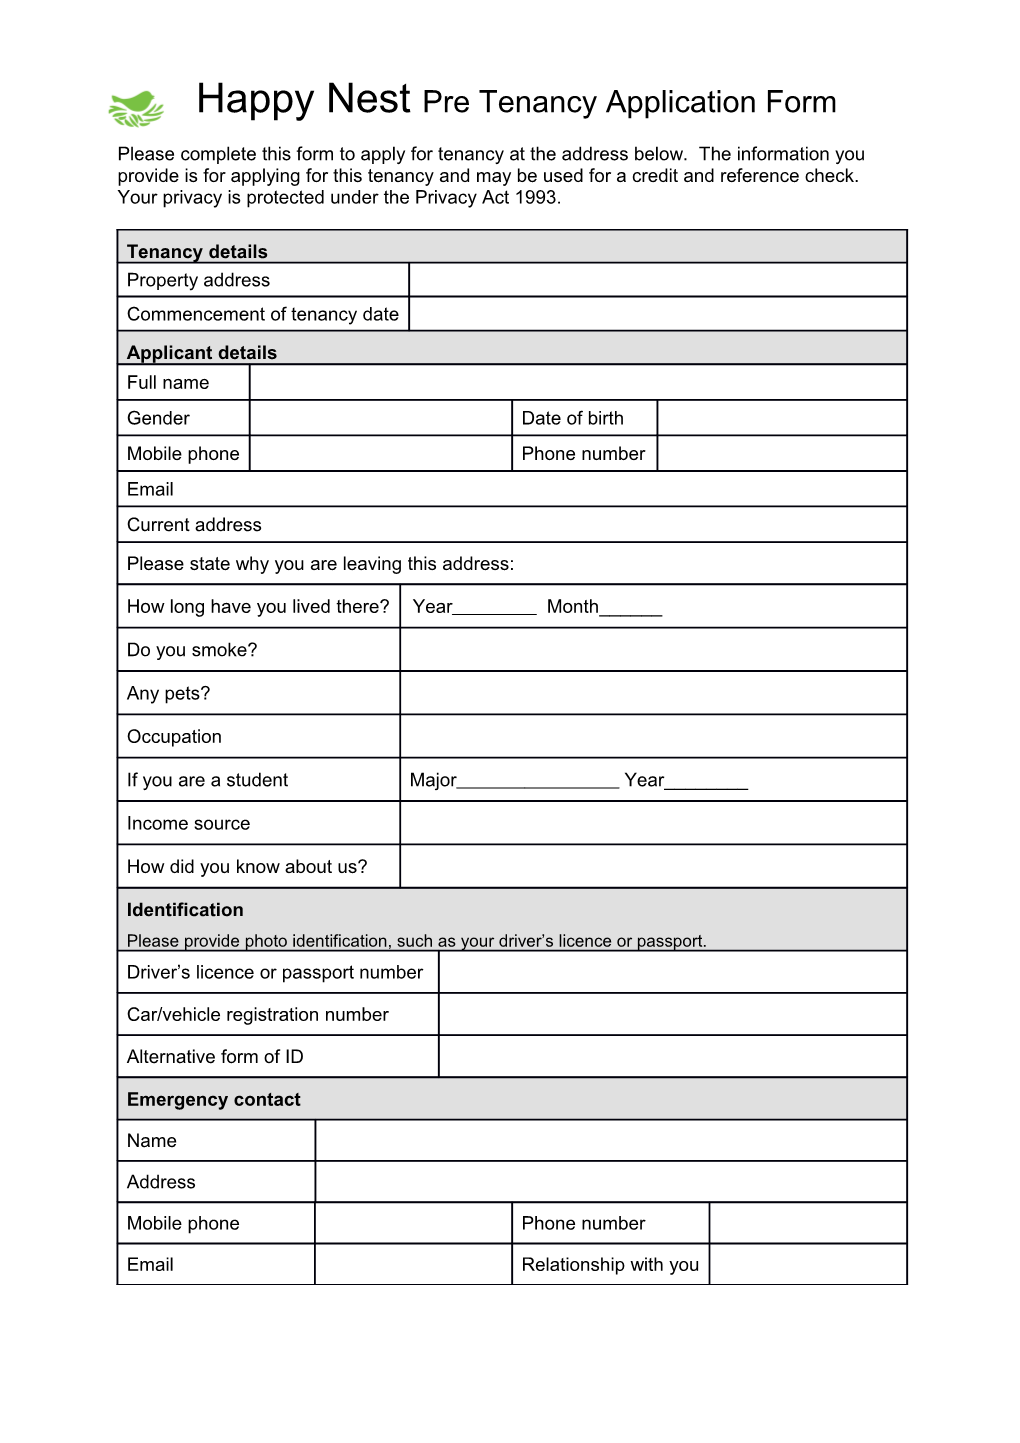 Pre-Tenancy Application Form